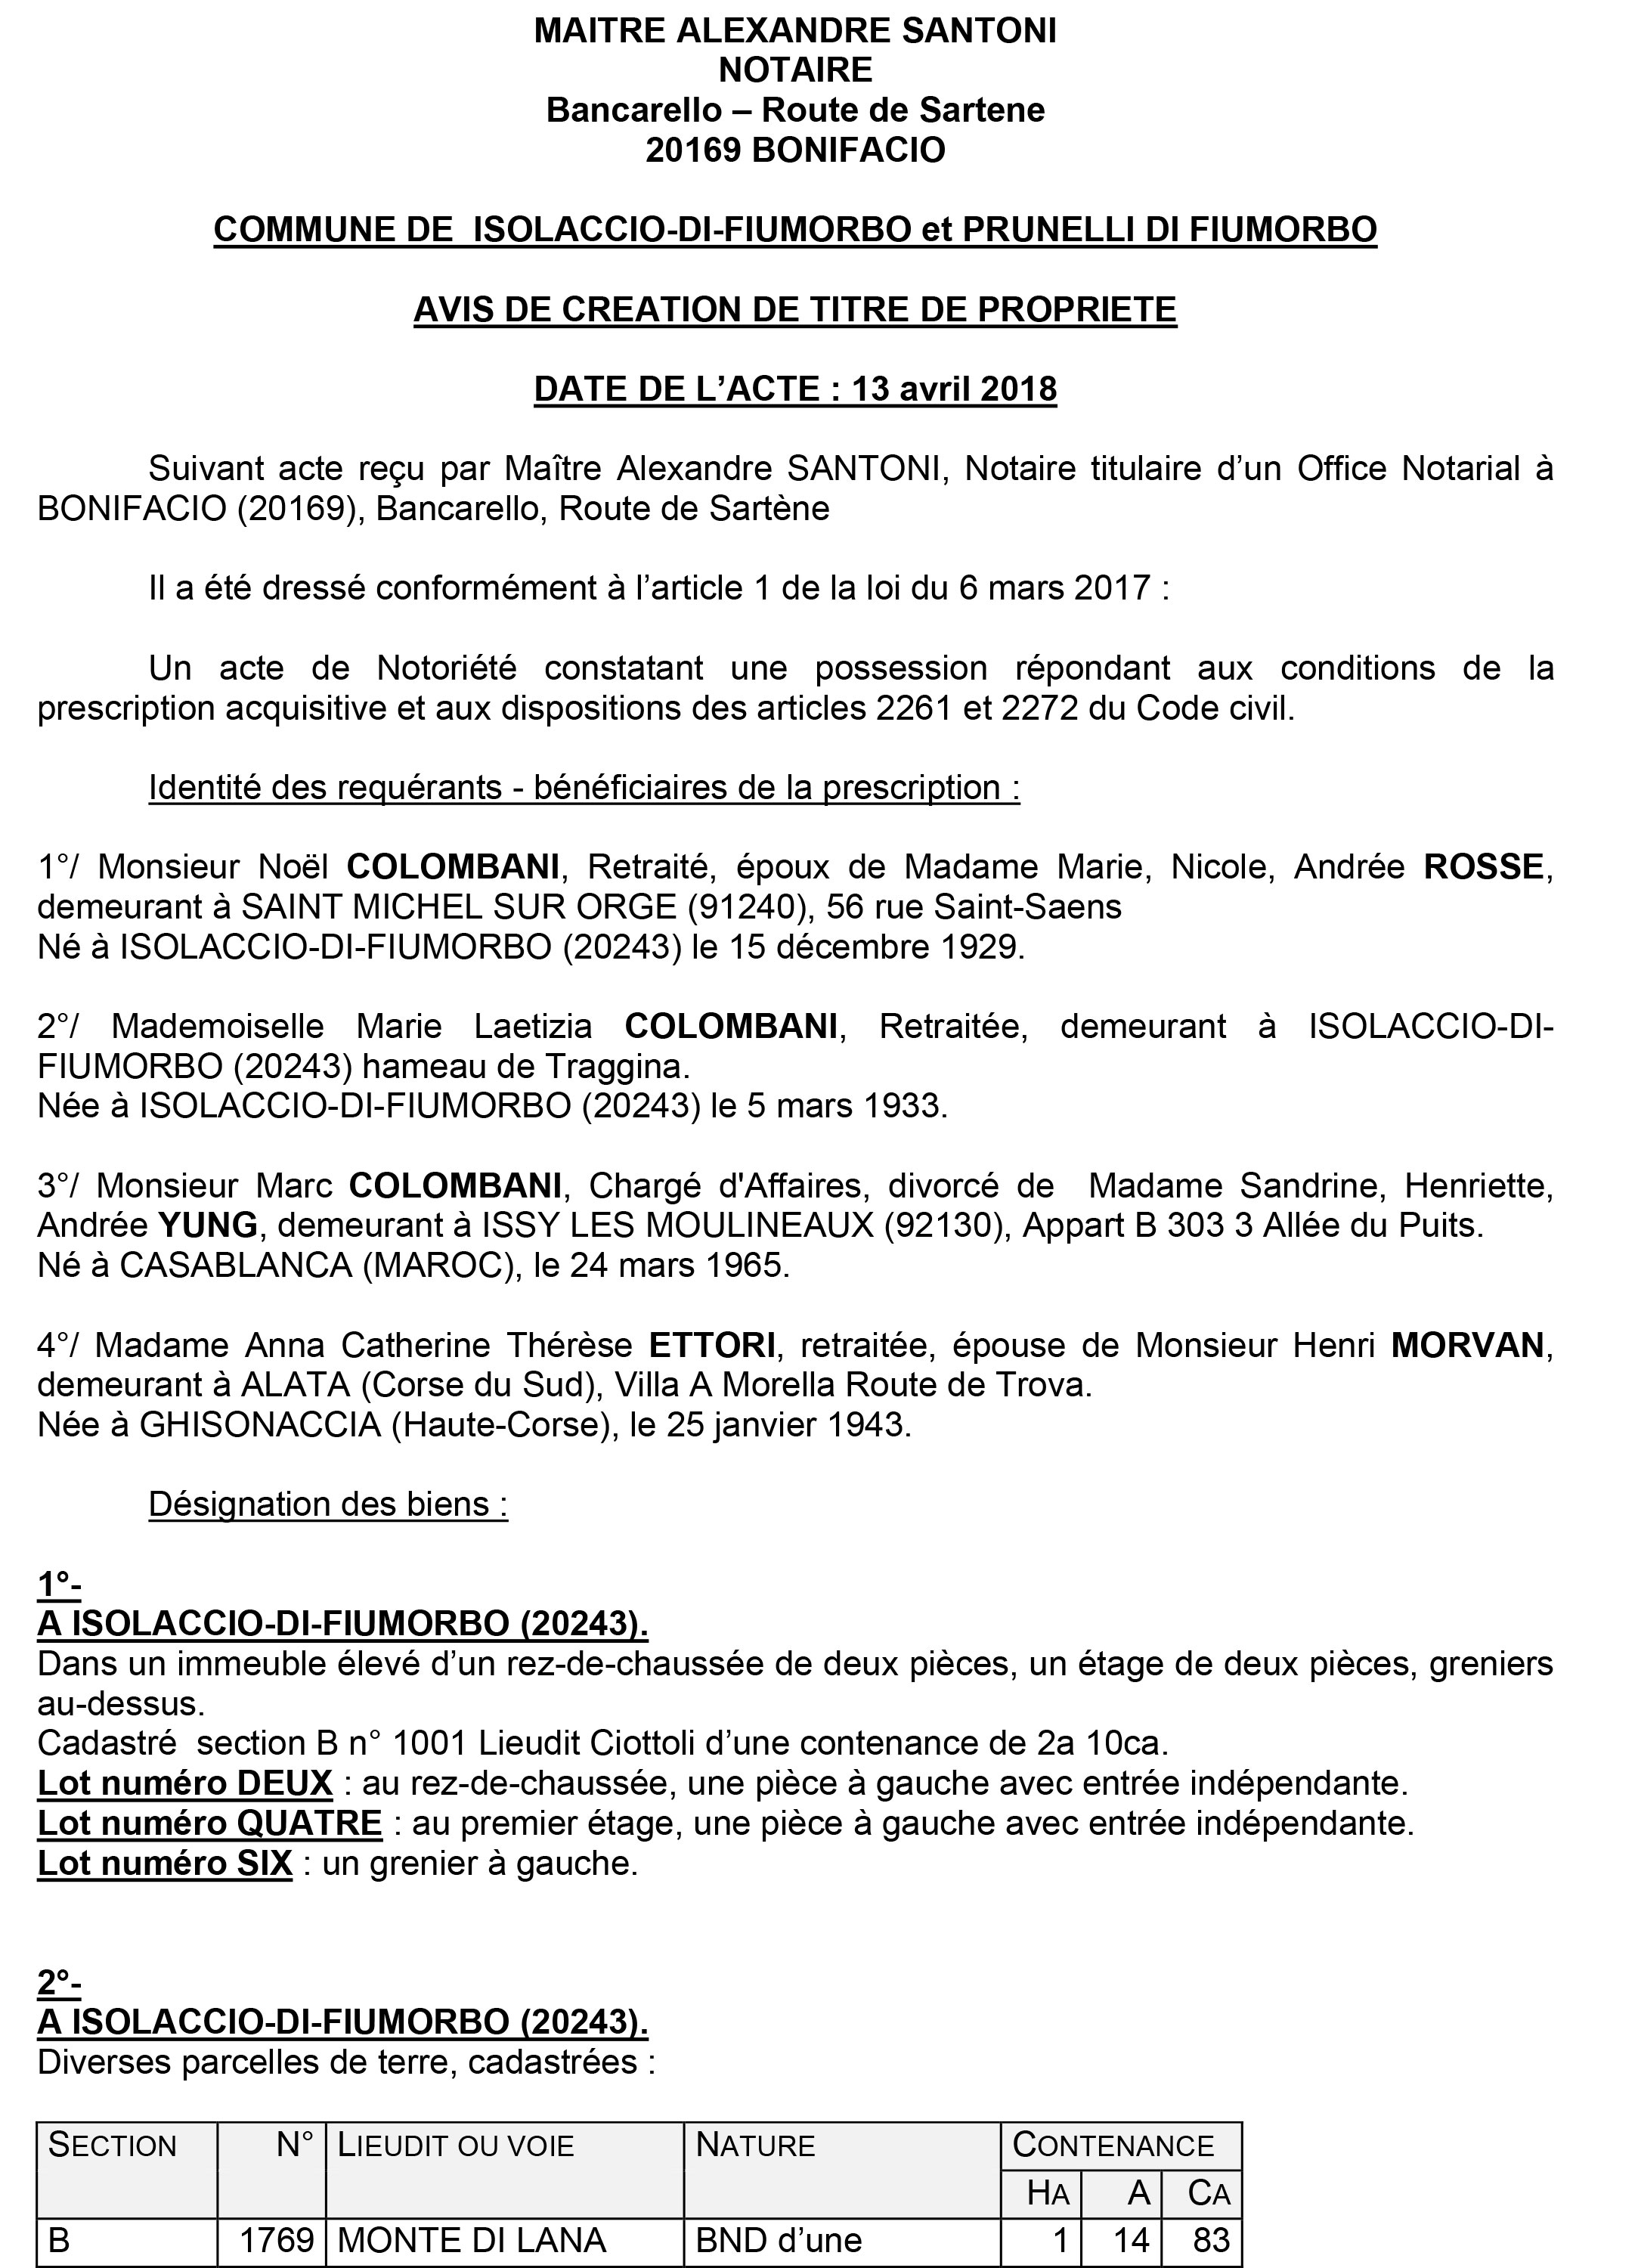 Avis de création de titre de propriété - communes de Isolaccio-di-Fiumorbu et Prunelli di Fiumorbu (Haute-Corse)